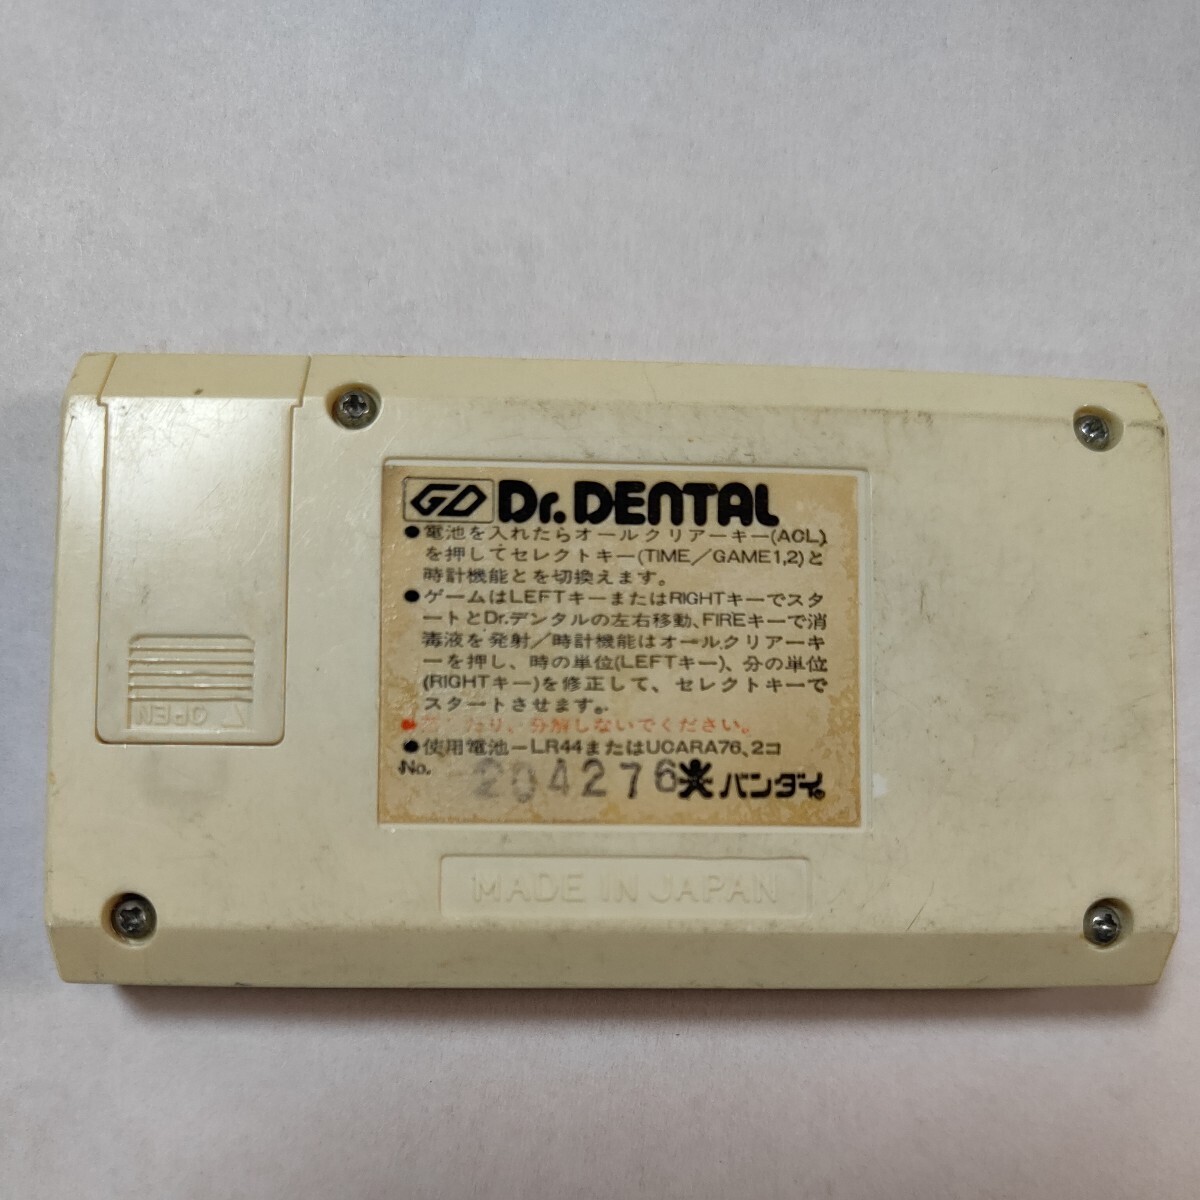 P06 [ operation possibility ] Game & Watch dokta- dental Dr. Dental Bandai Game & Watch BANDAI GAME game machine Showa Retro used 